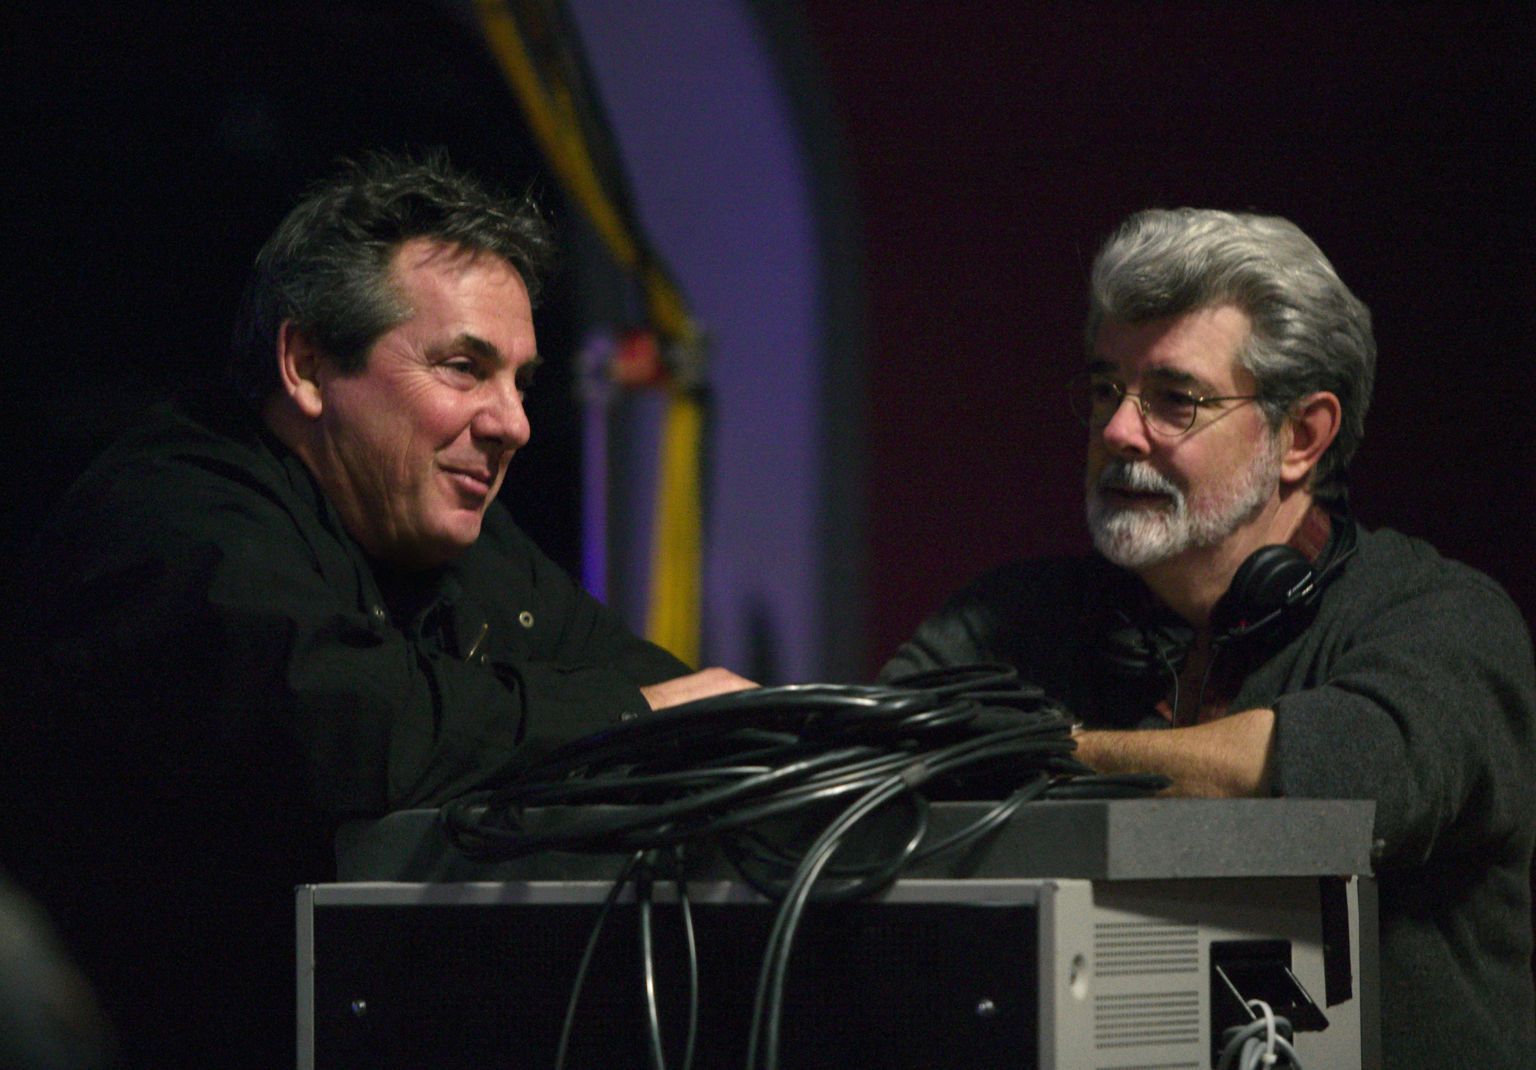 George Lucas and Rick McCallum in Zvaigzdziu karai. Situ kerstas (2005)